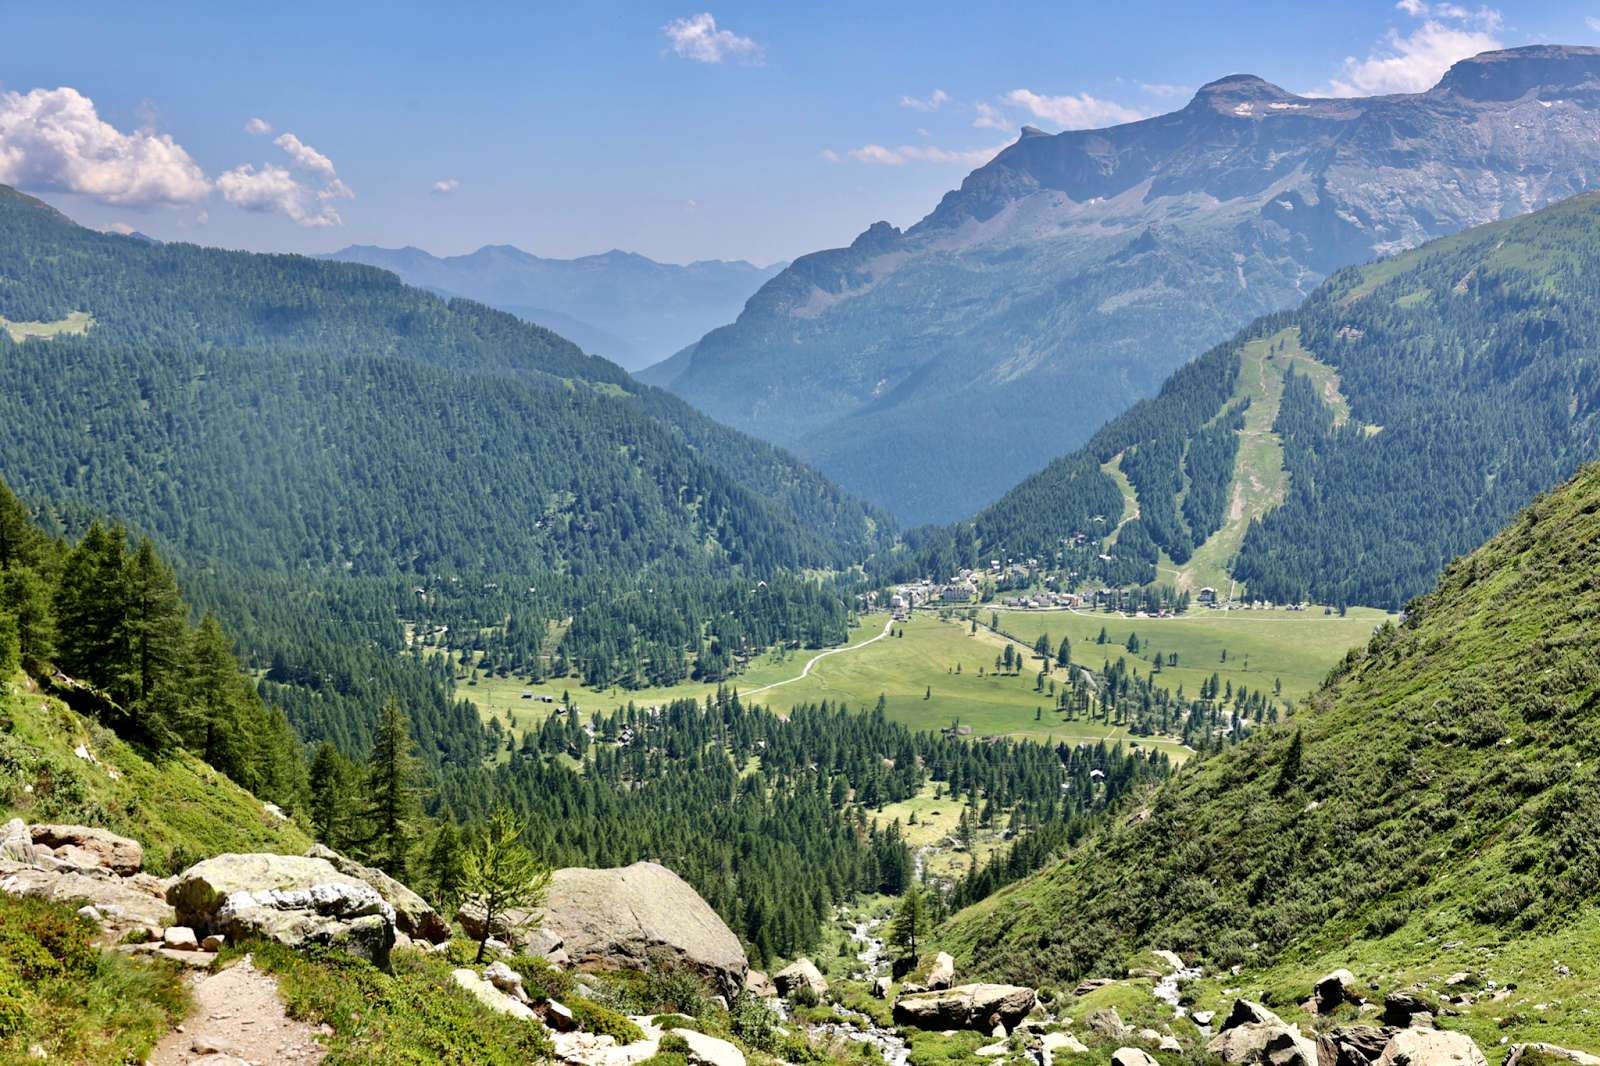 View of the Alpe Devero